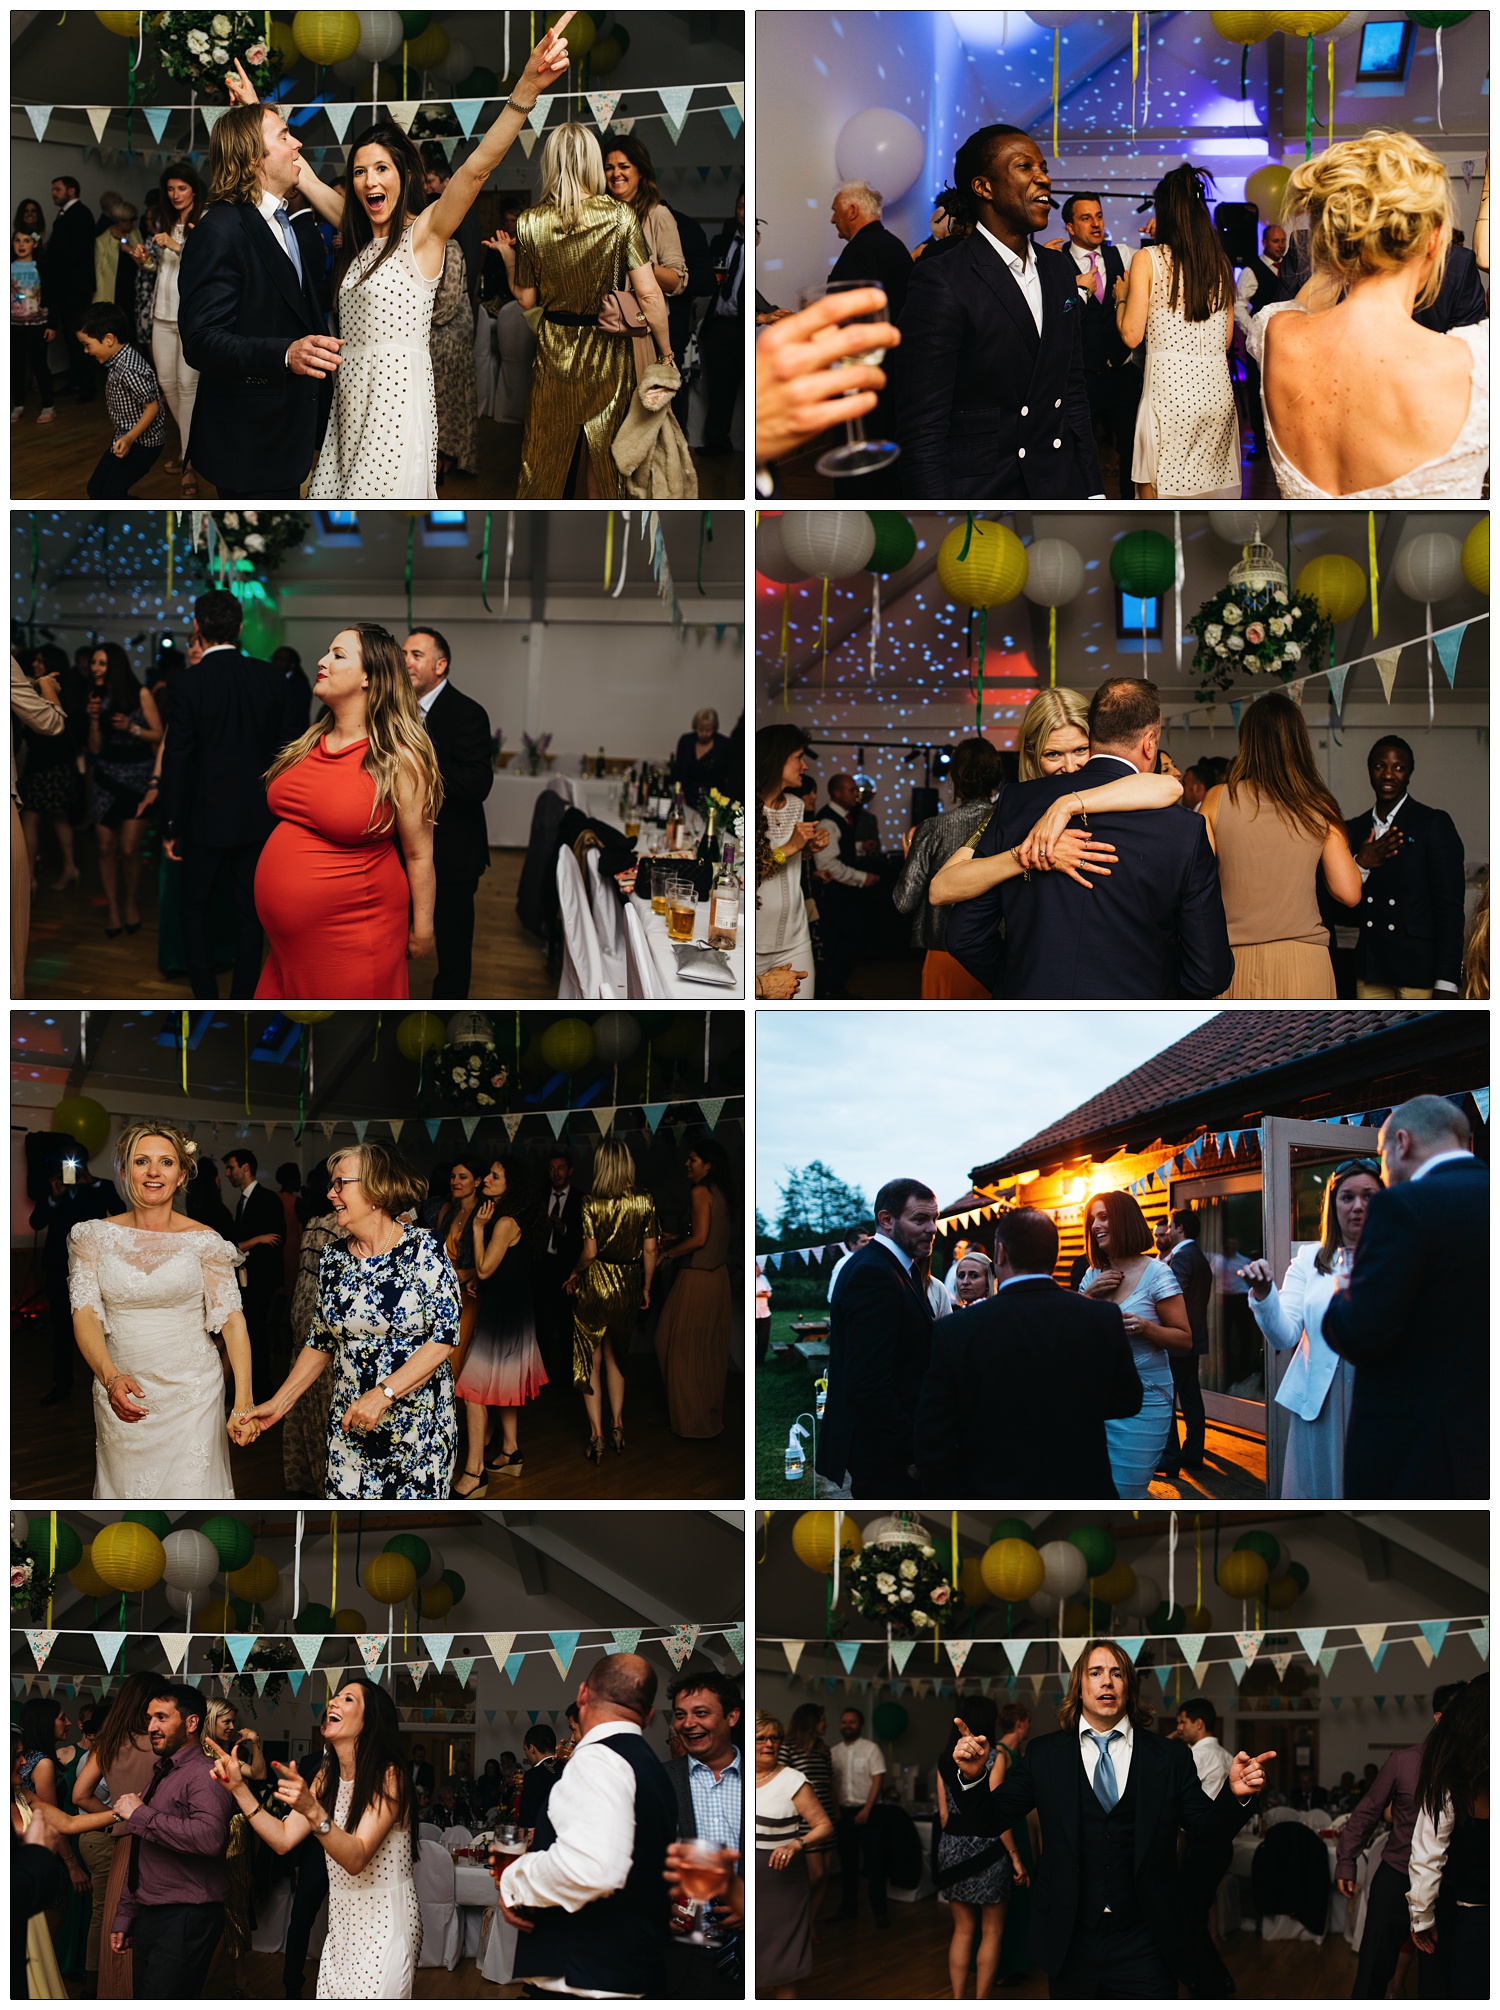 people dancing at wedding reception at Swanton Village hall